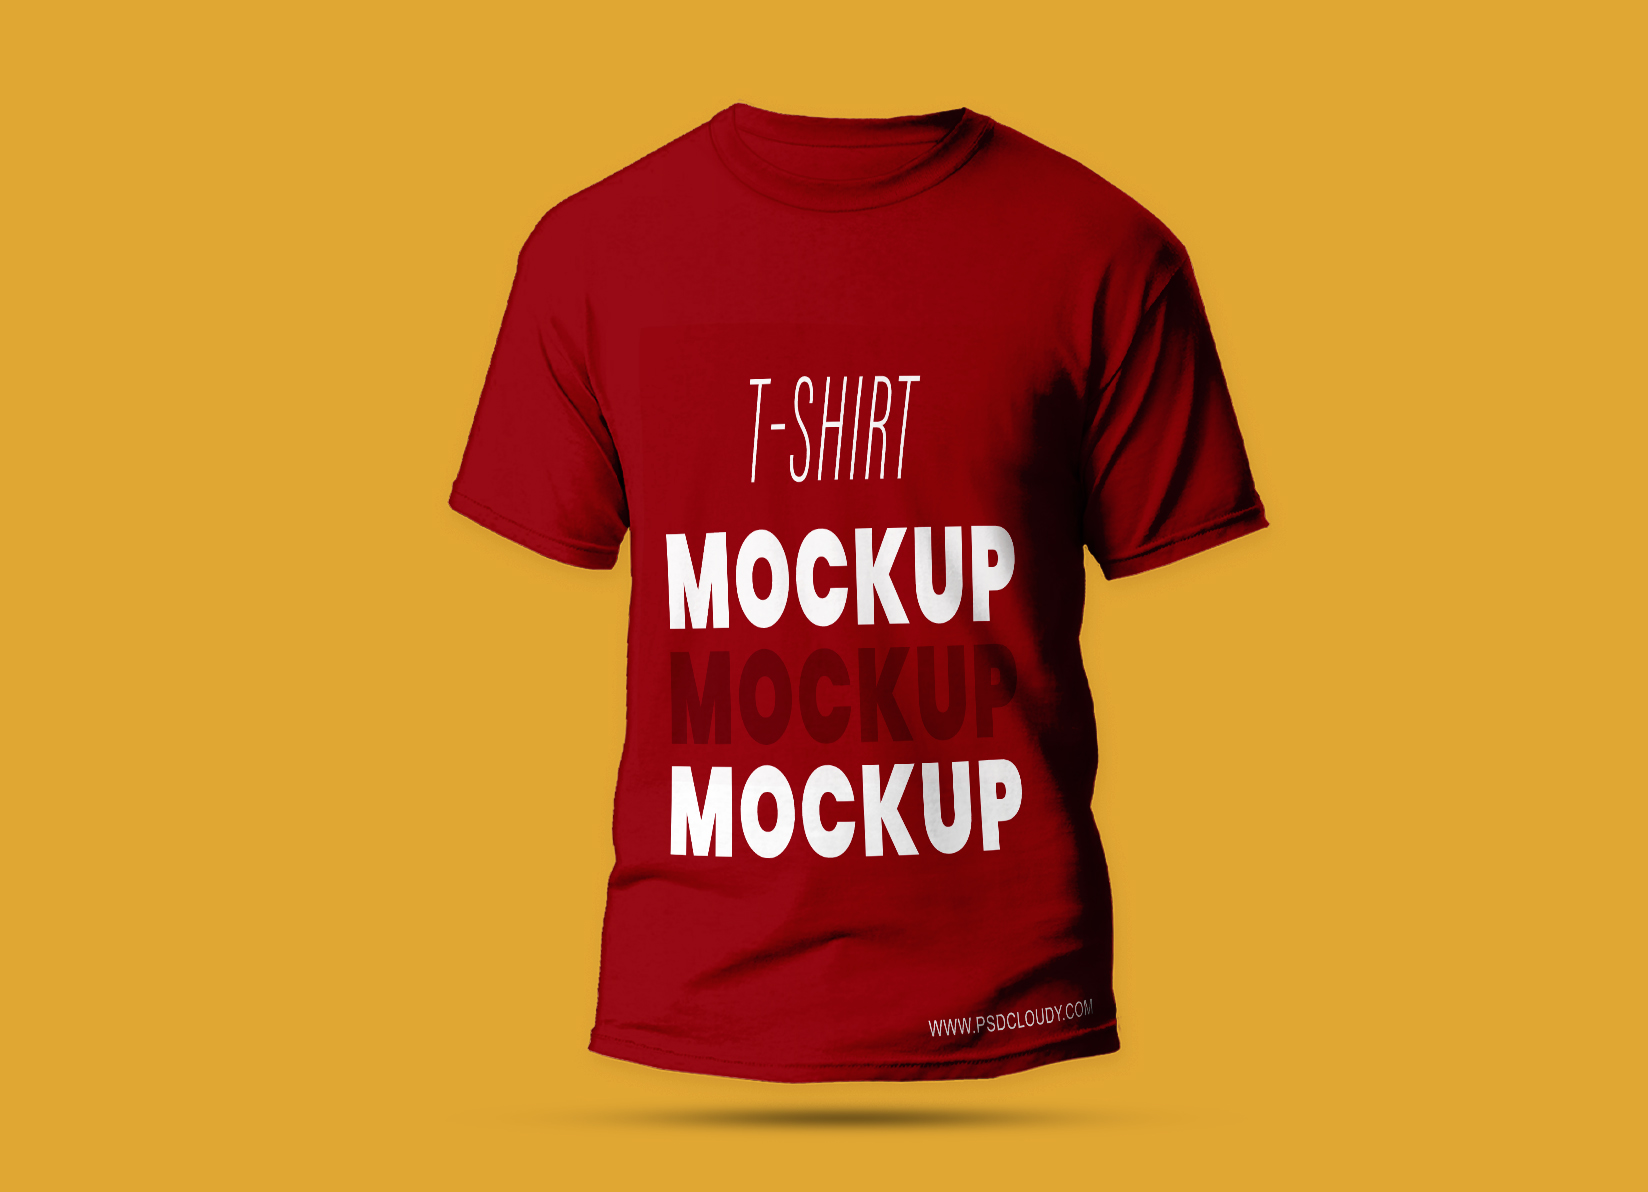 T-Shirt Mockup PSD Free Download - PsdCloudy